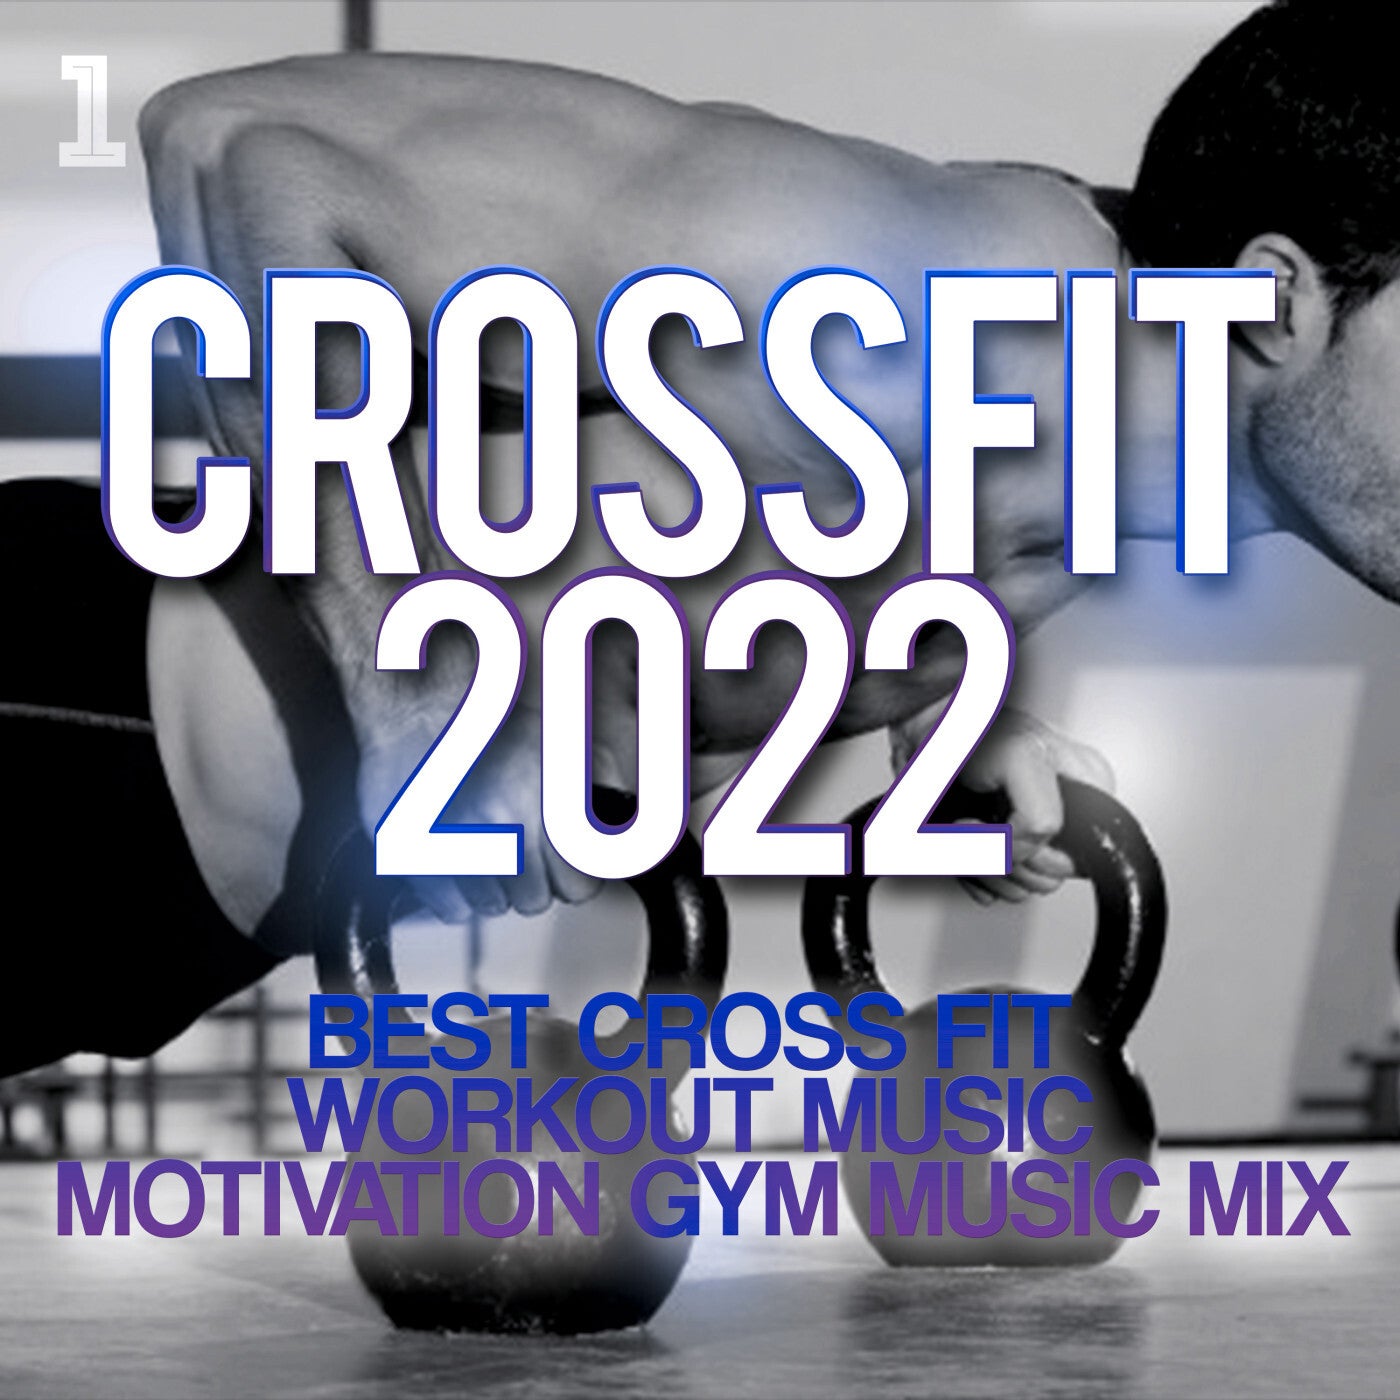 Crossfit 2022 - Best Cross Fit Workout Music - Motivation Gym Music Mix by  Doubl3 Mask, Gate 21, Michael Roman, Aldo Bit, Re Bel, Redmark, Siveti,  Alka & Feiv, Matthew Bee, DJ